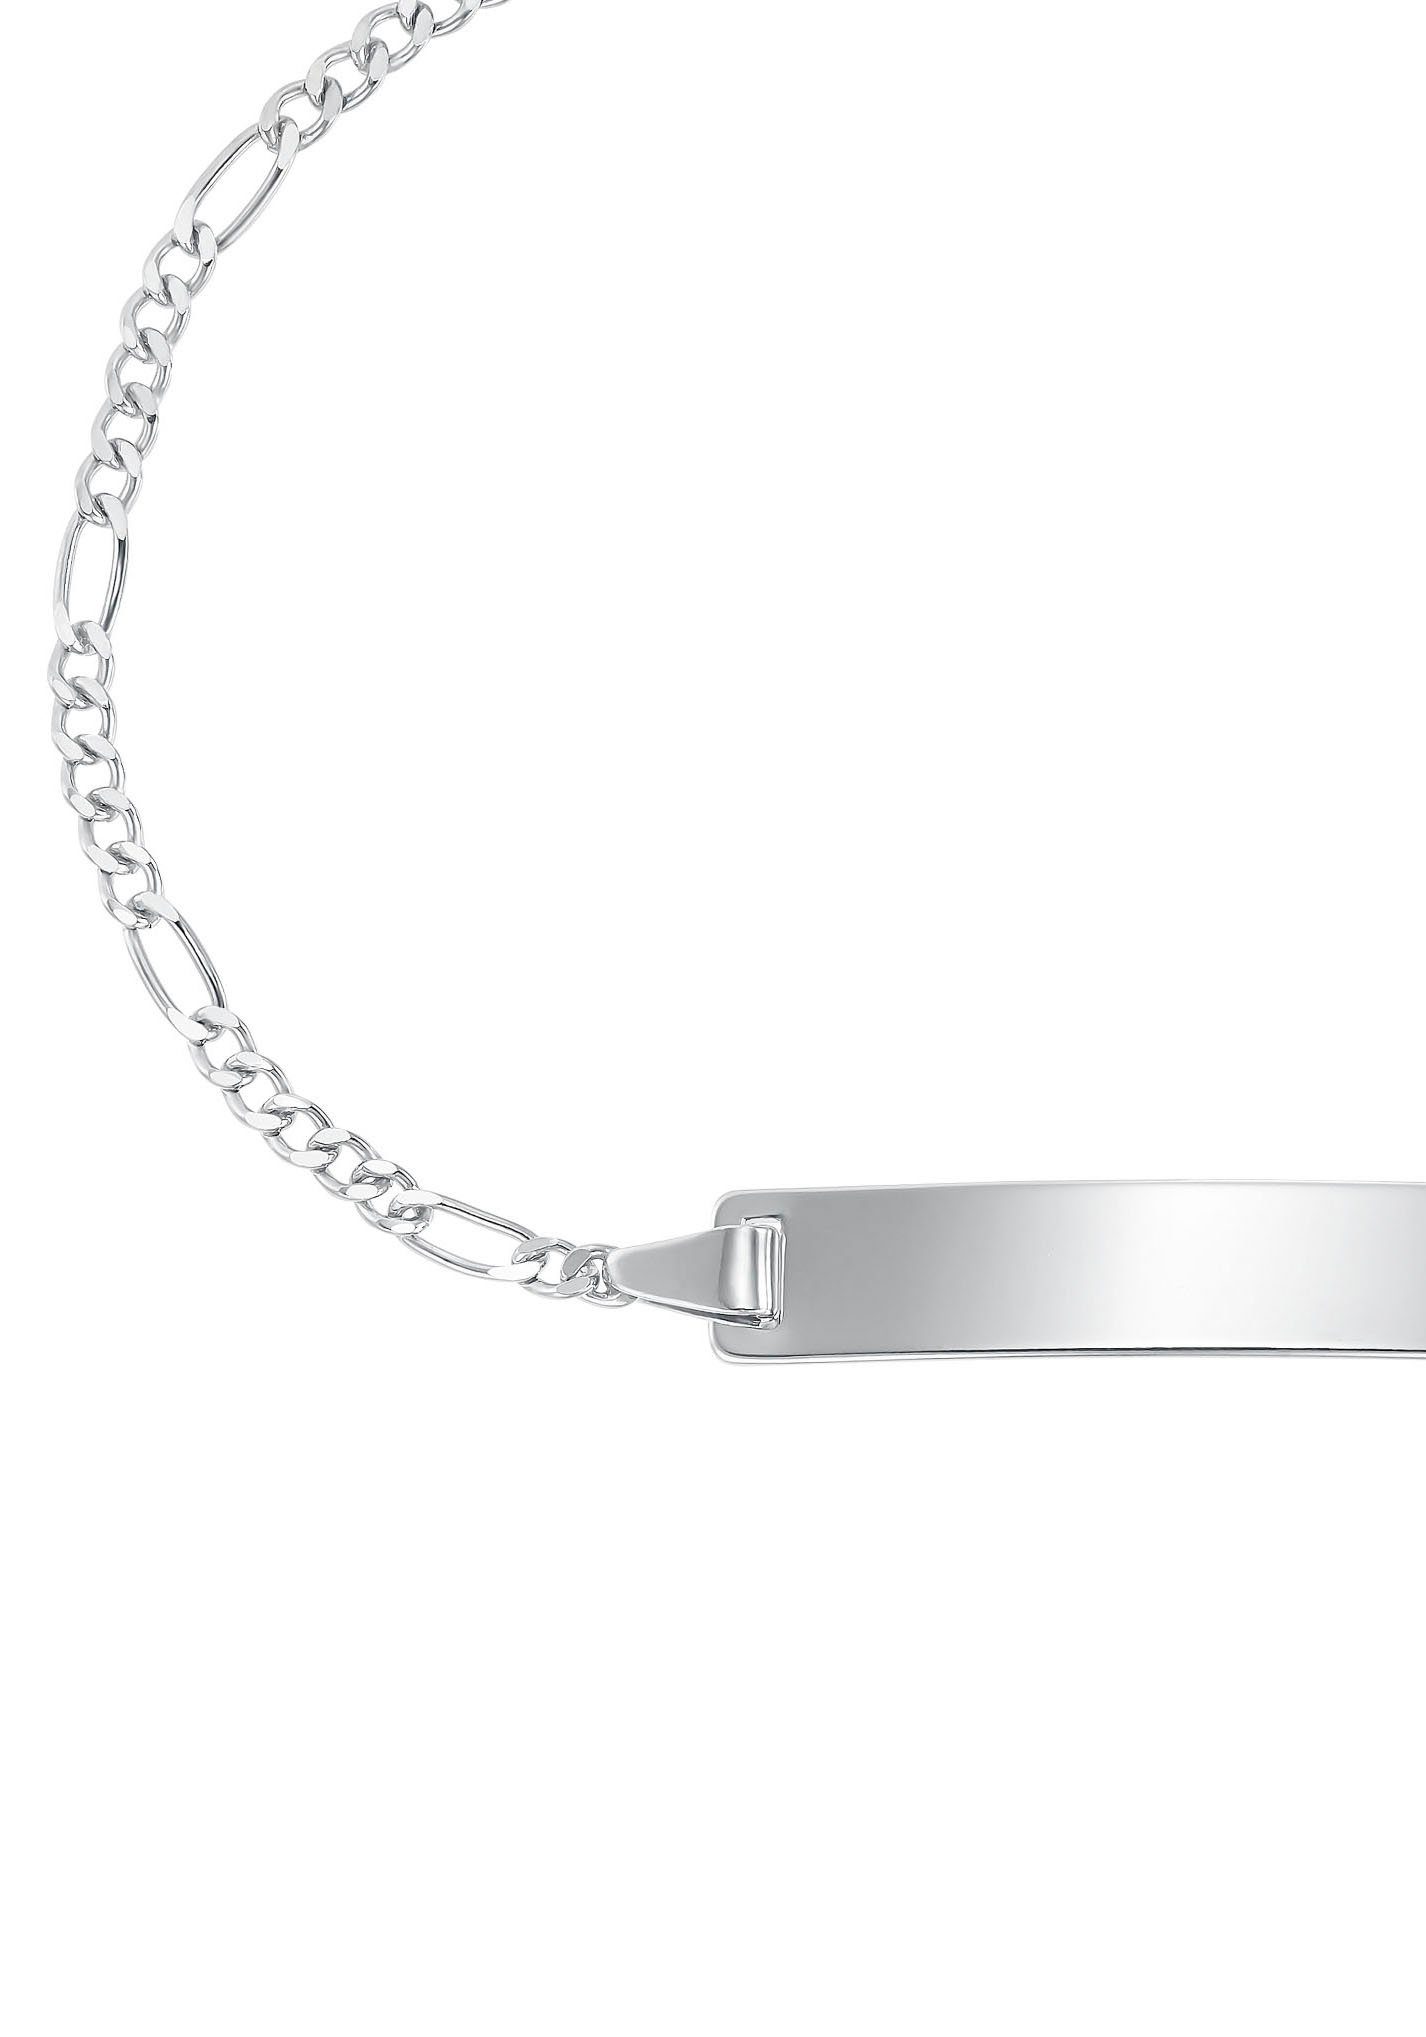 Ident Amor Bracelet, Made in Armband 2016492, ID Germany